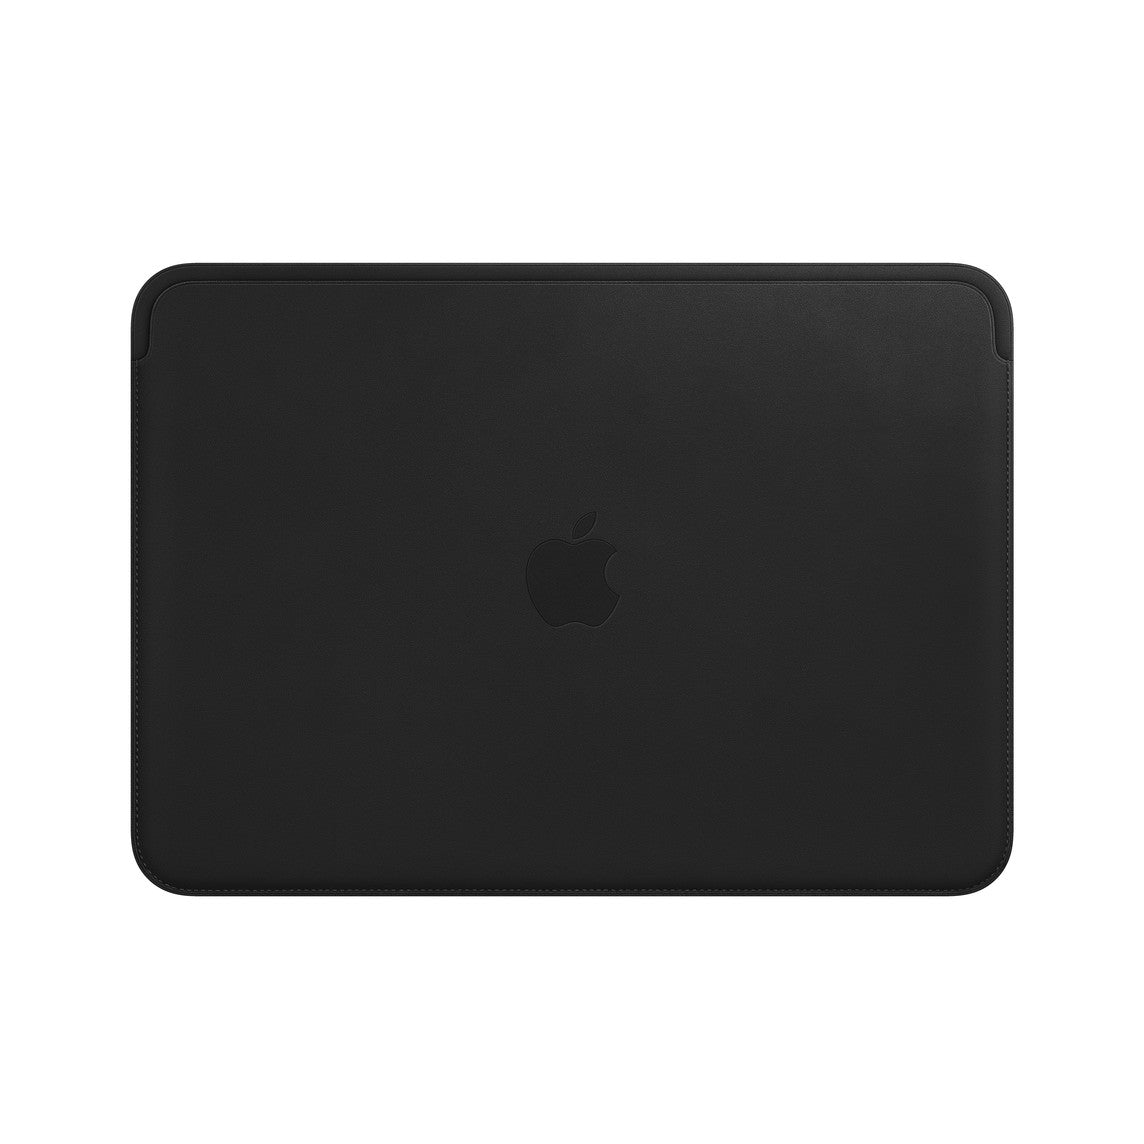 Apple MacBook Pro 15 Leather Sleeve - Black Black New - Sealed